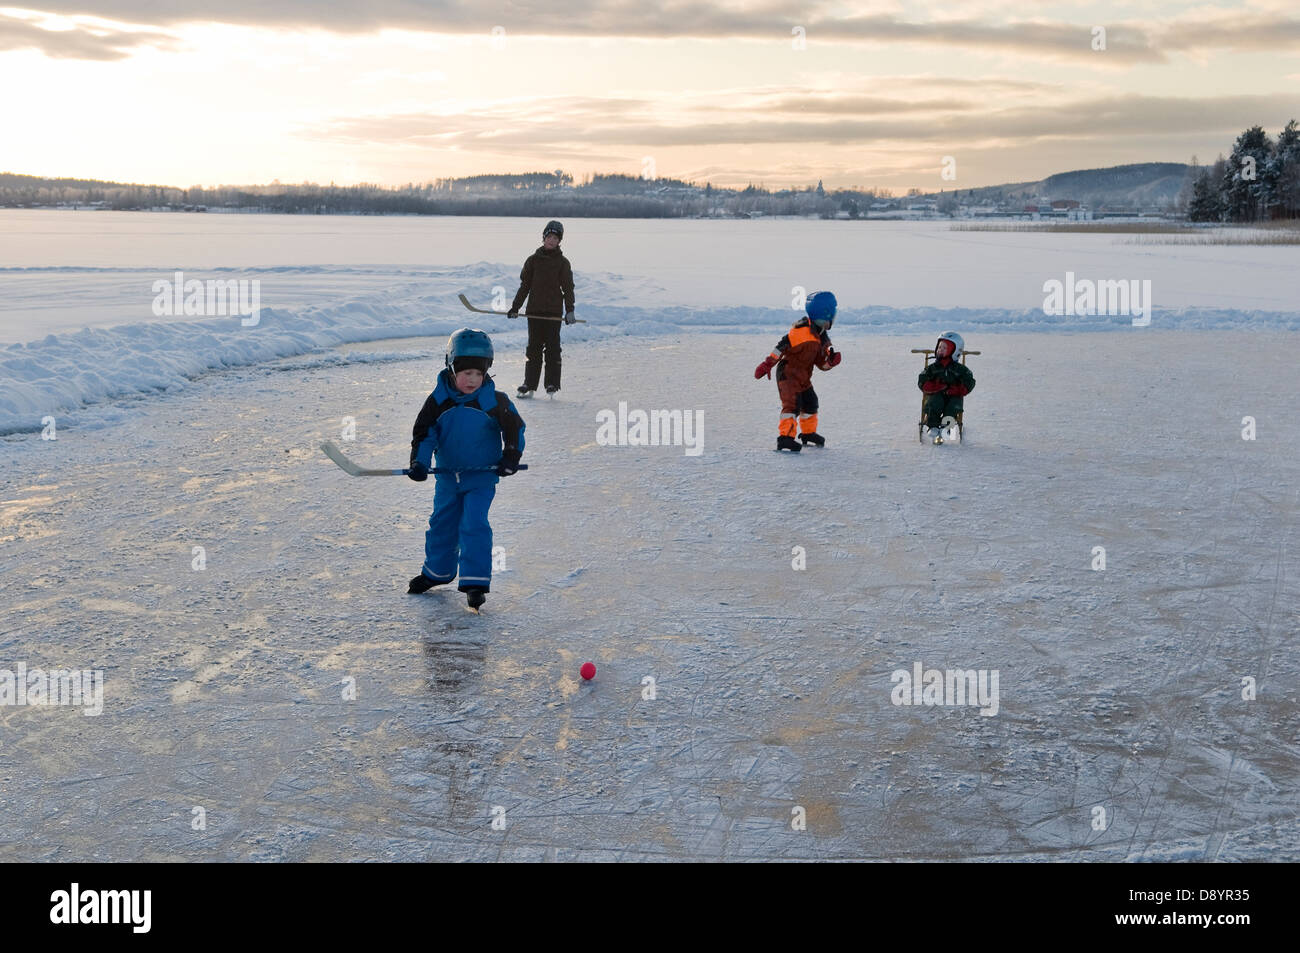 Children playing ice hockey on frozen lake Stock Photo